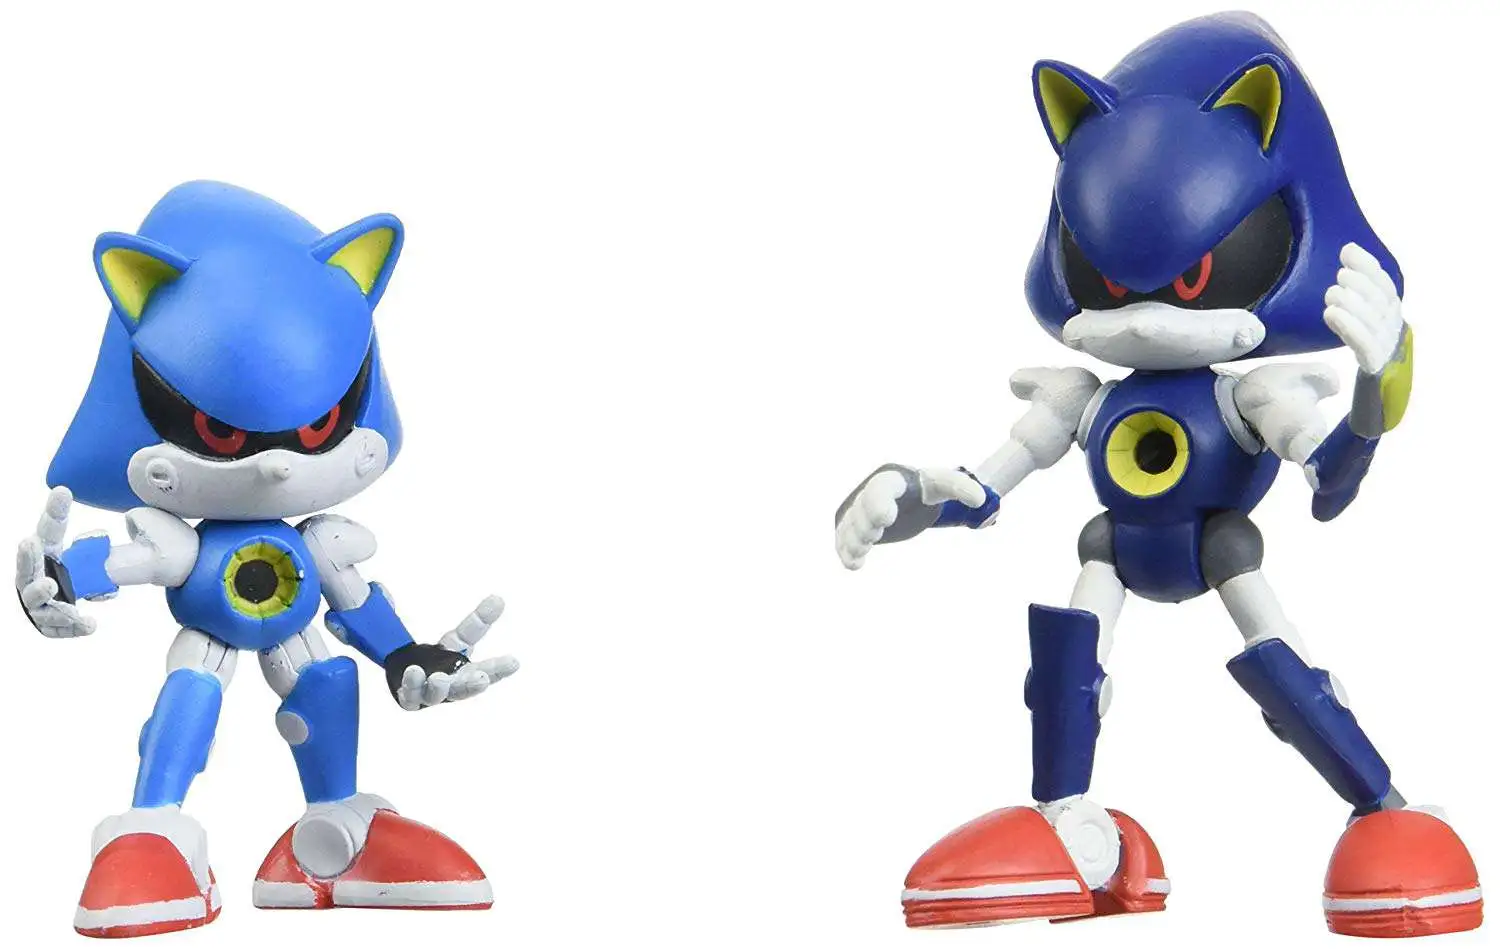 Sonic The Hedgehog Sonic Boom Metal Sonic 3 Action Figure TOMY, Inc. -  ToyWiz